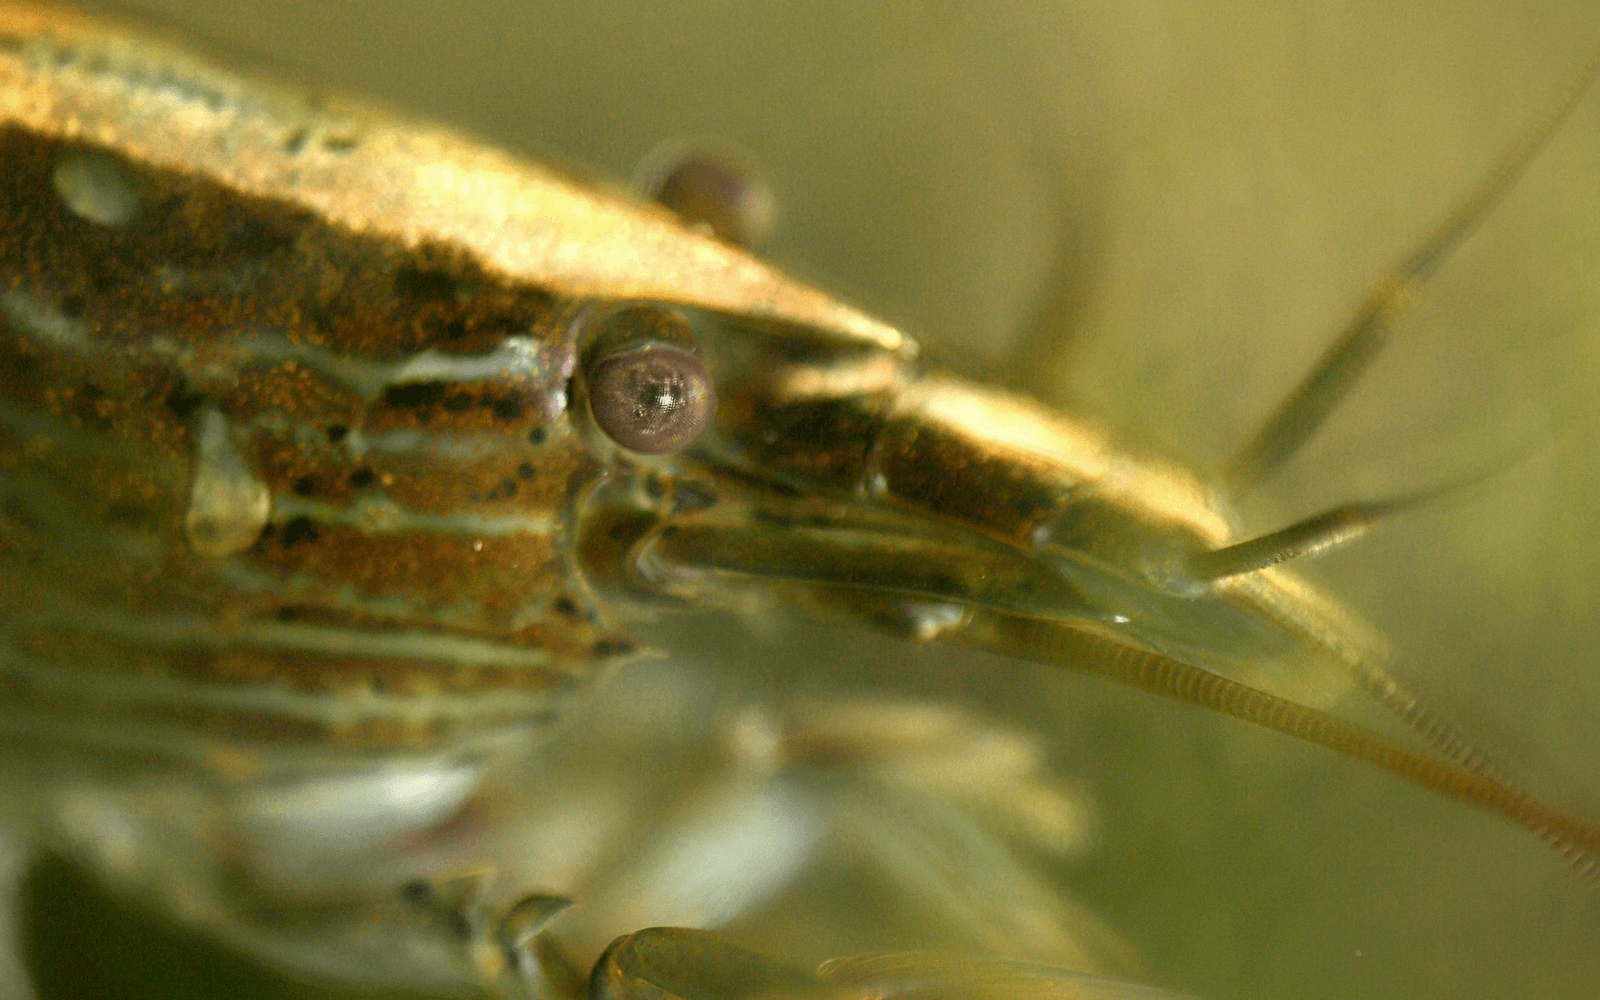 A bamboo shrimp